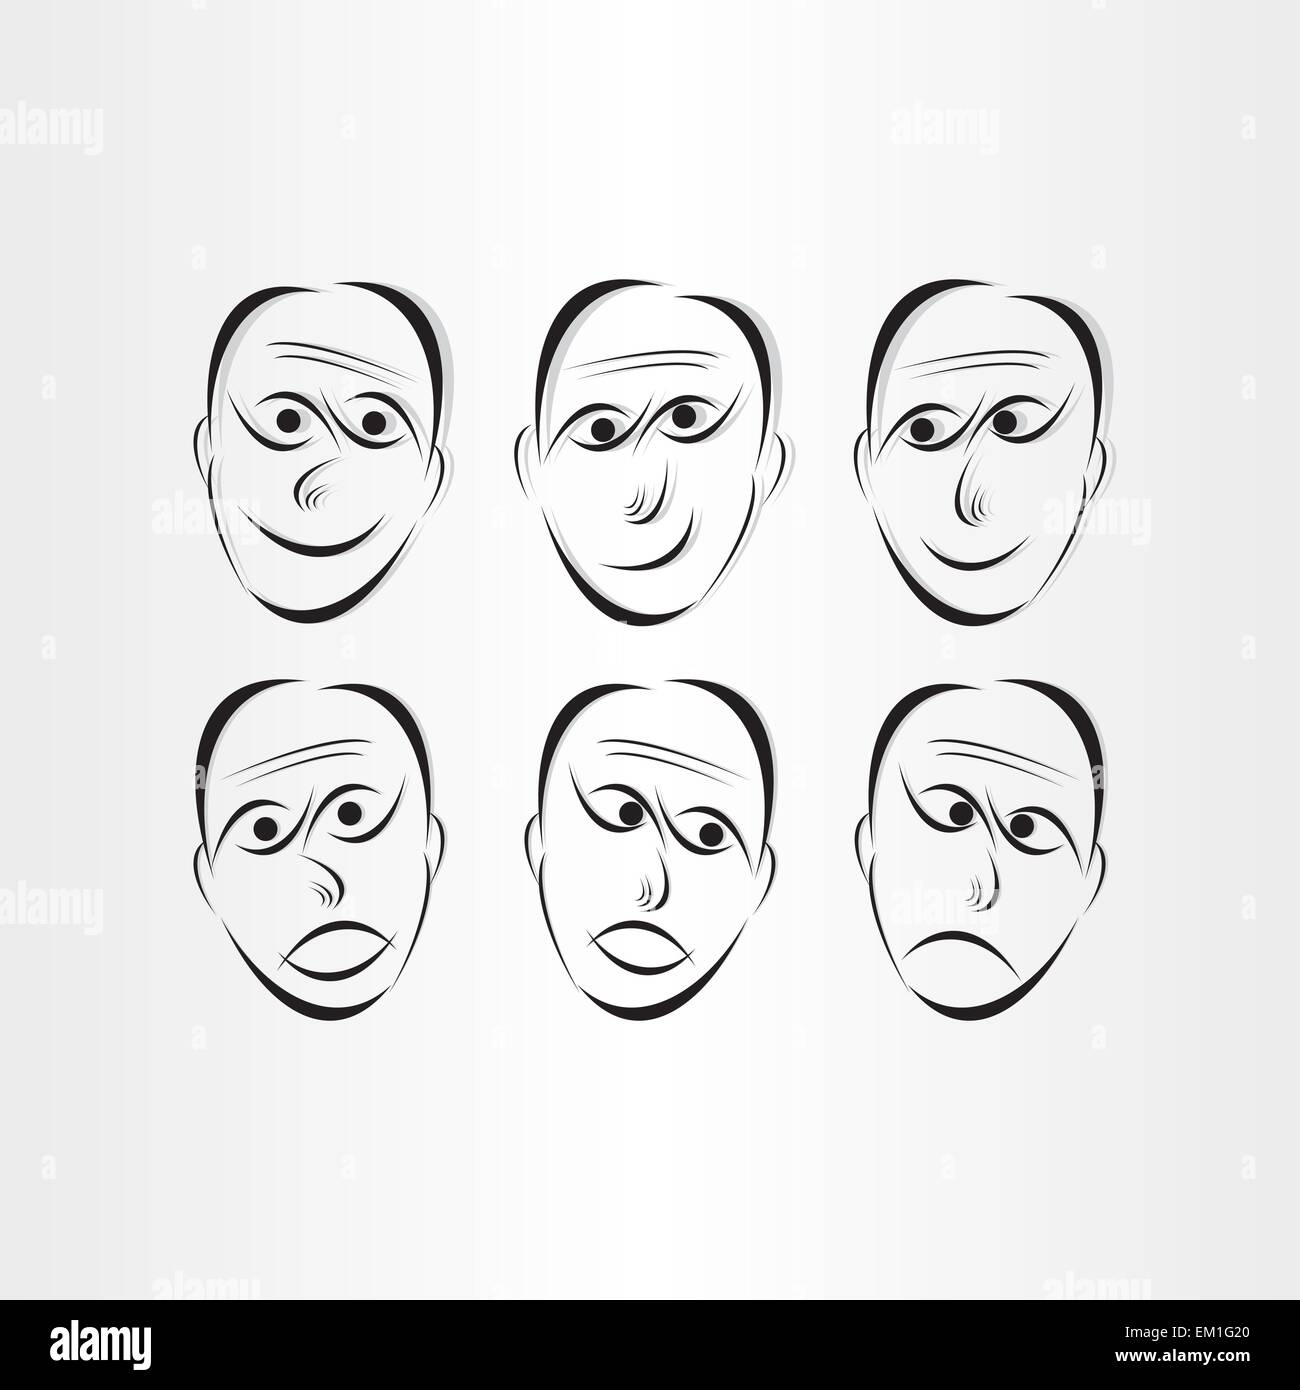 men faces emotions symbols abstract design elements Stock Vector